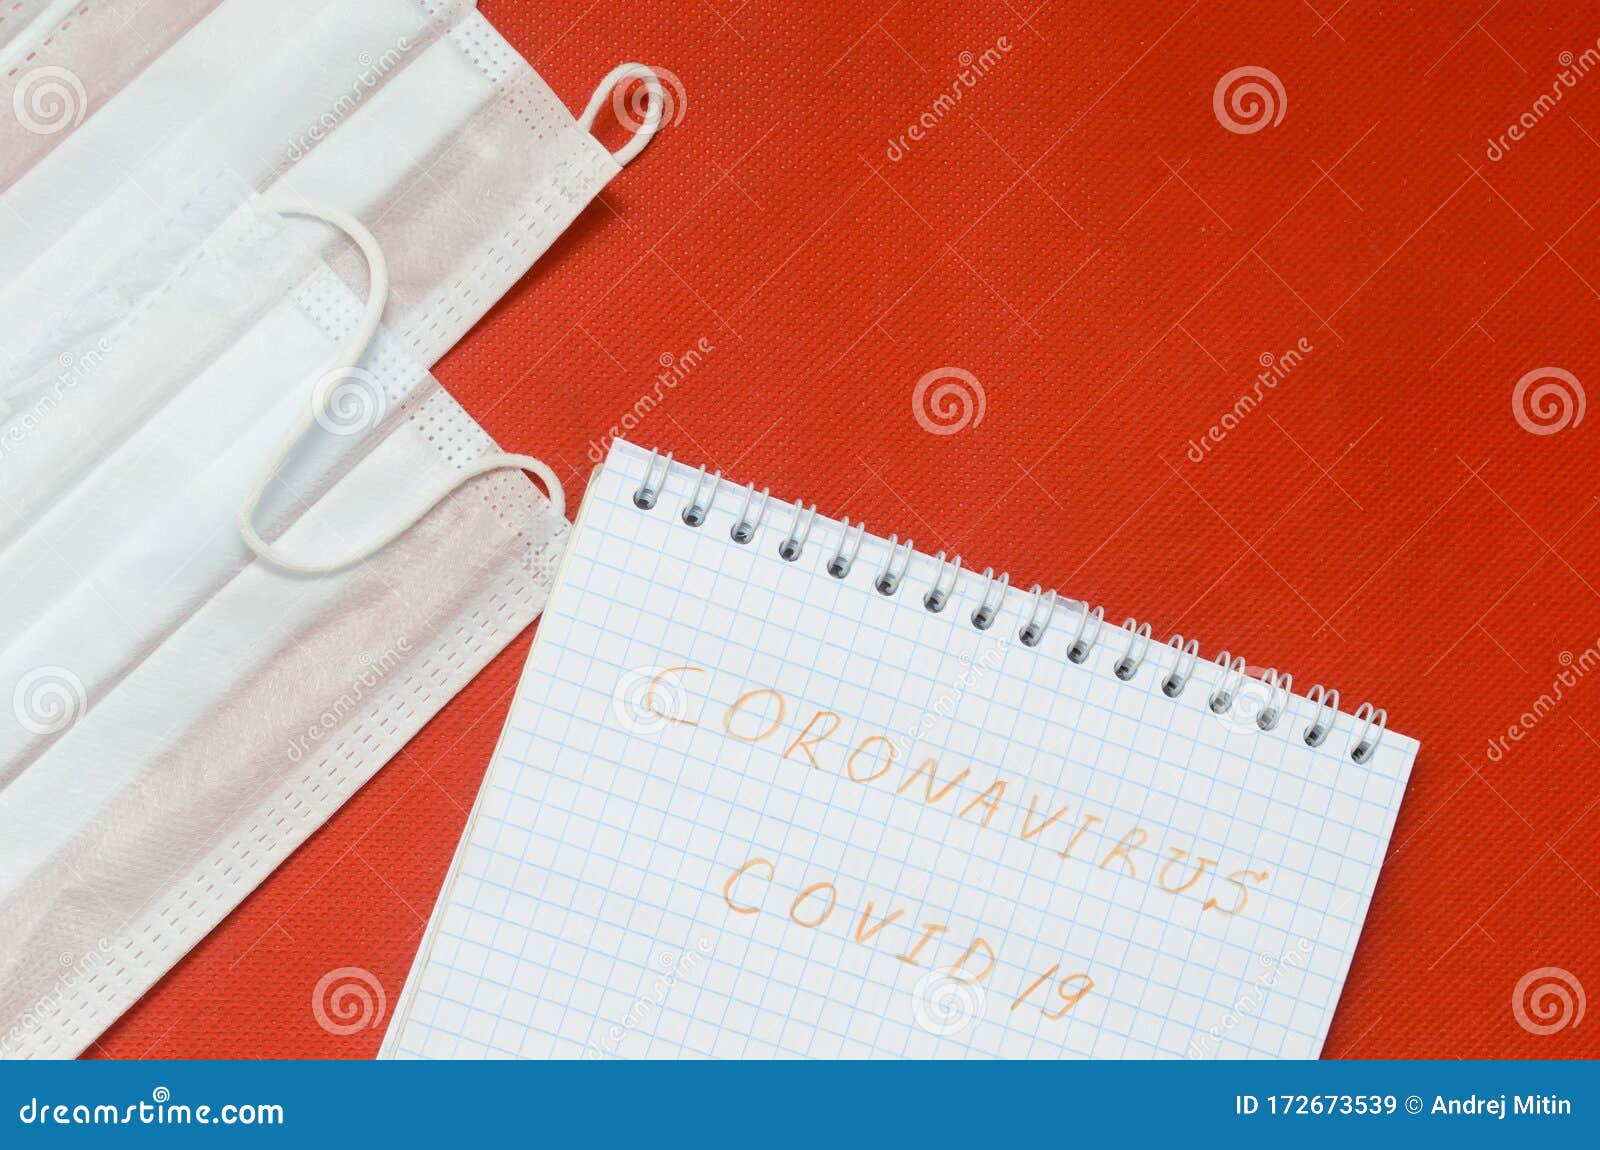 covid19.epidemia of coronavirus infection.medical masks on red background.